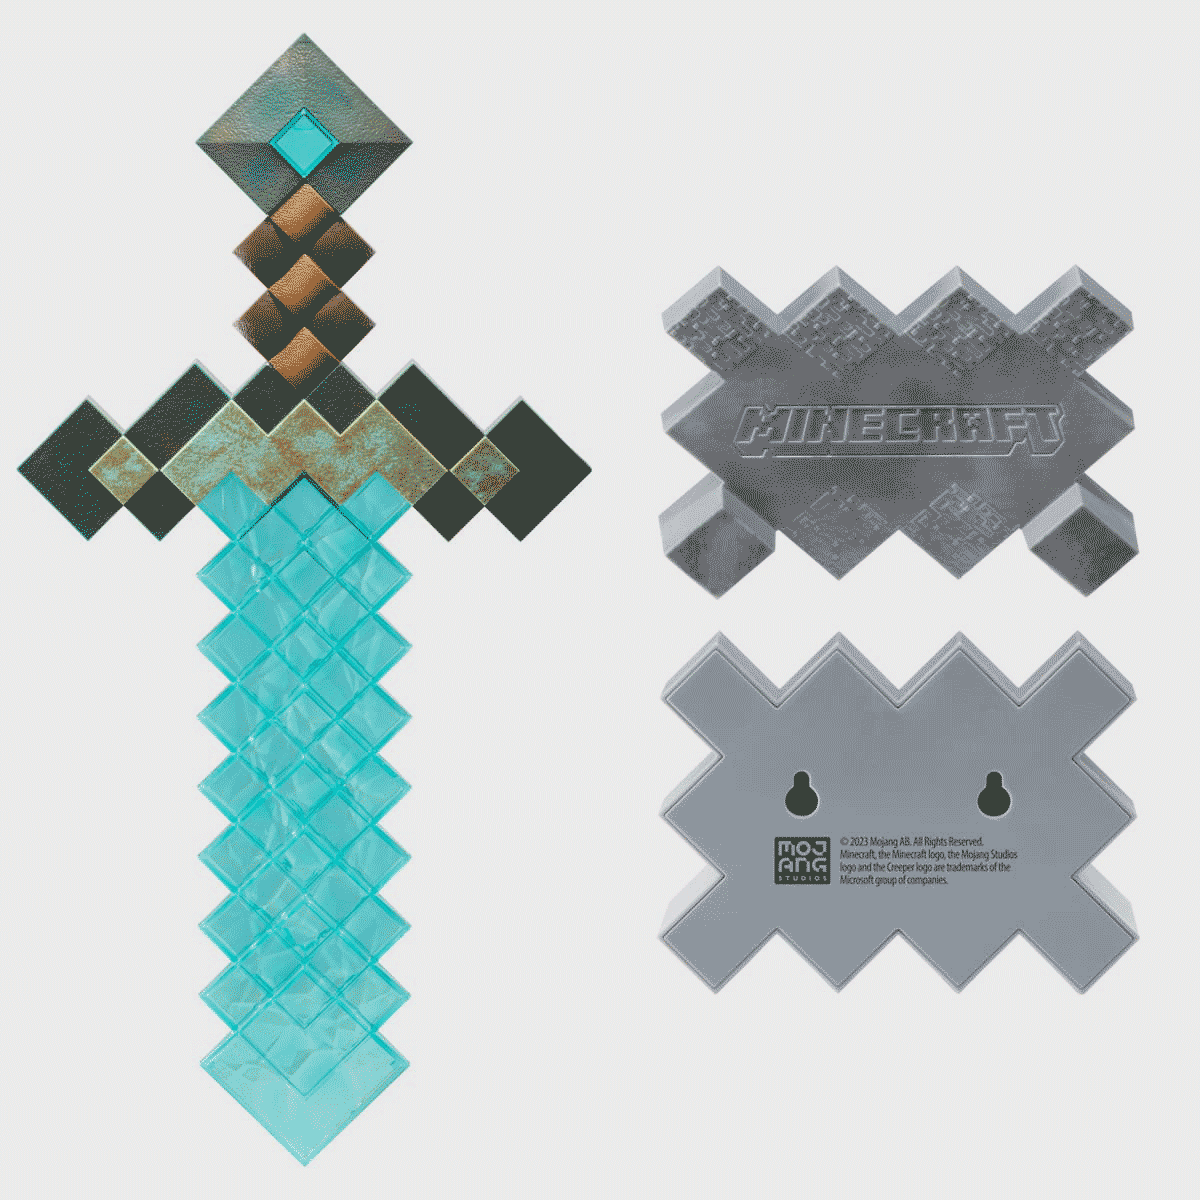 Minecraft Diamond Sword Collector Replica